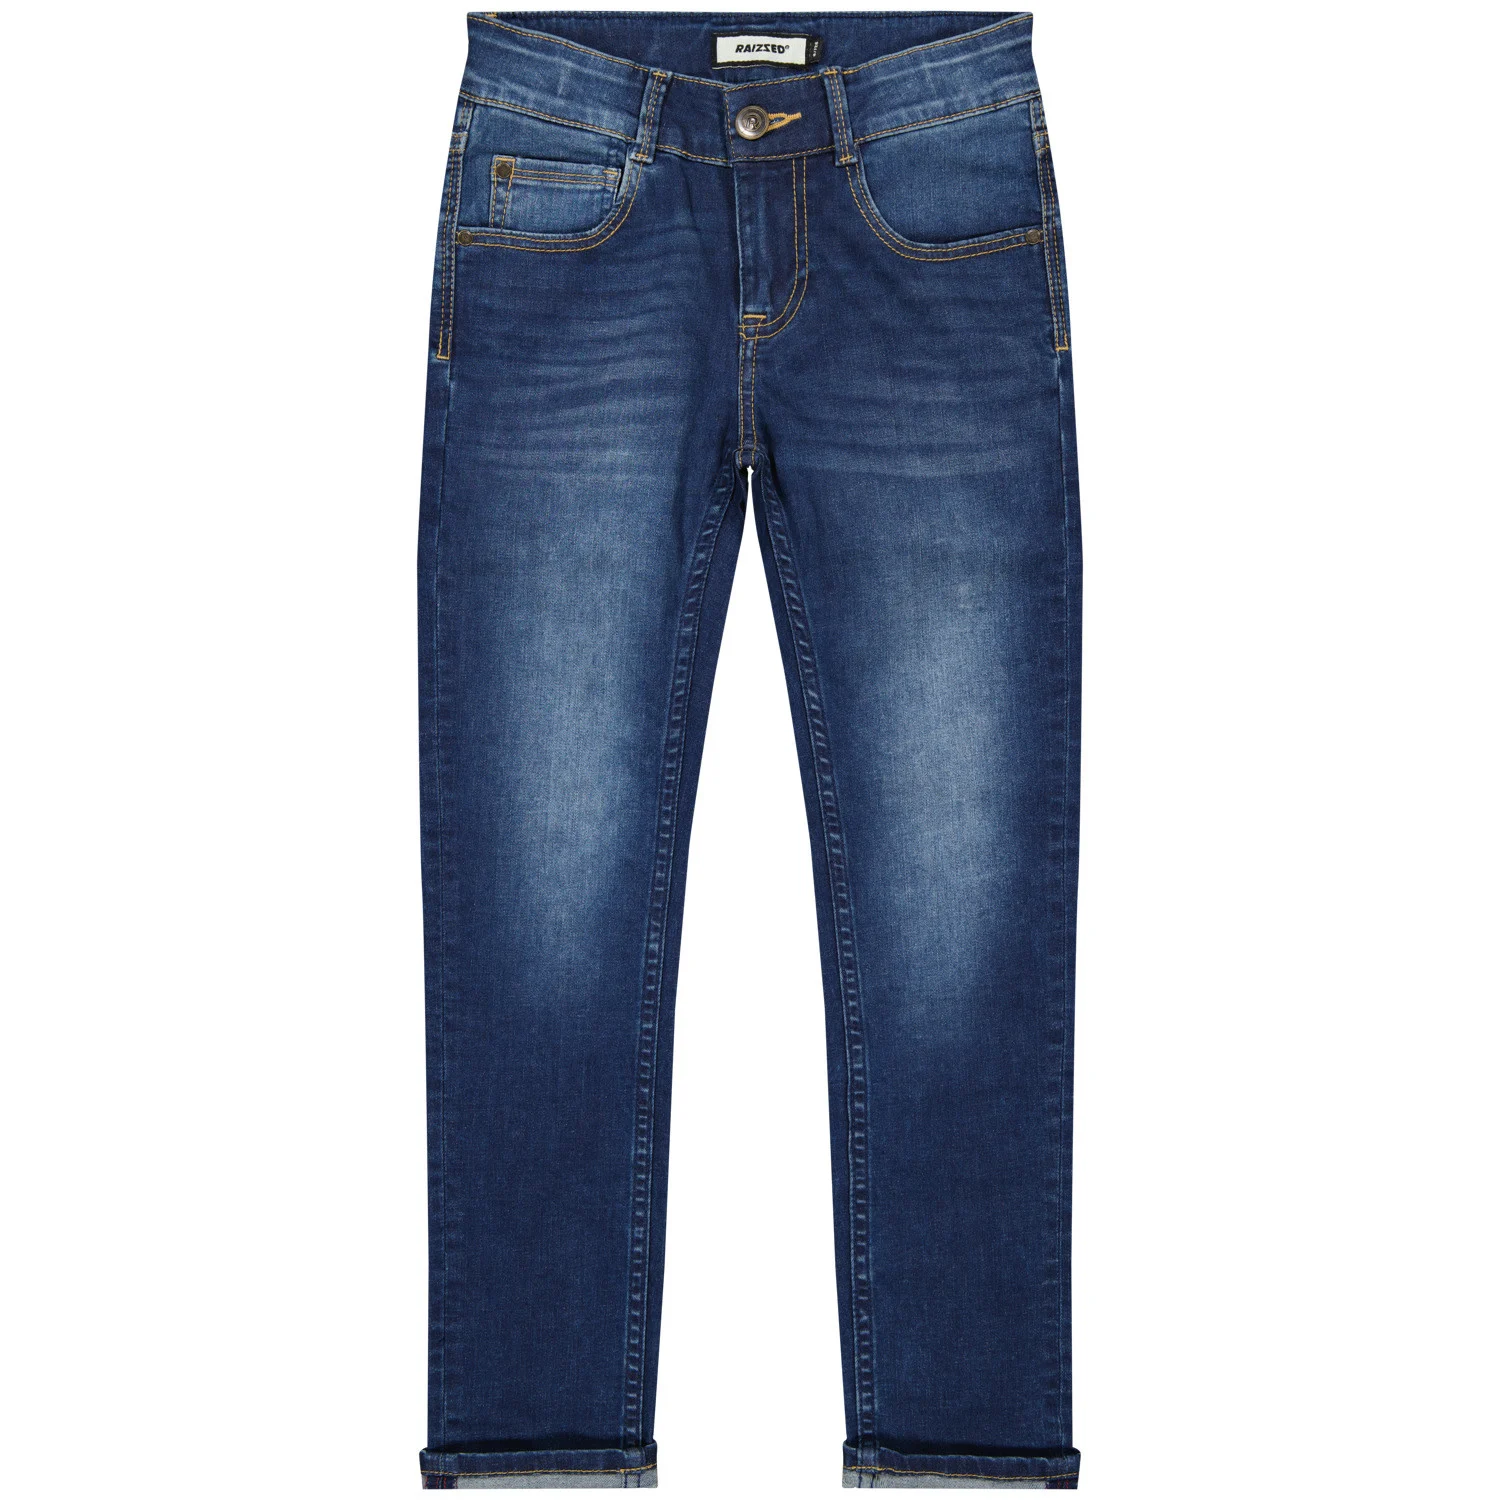 Afbeelding van Raizzed Jongens jeans nora tokyo skinny fit dark blue stone